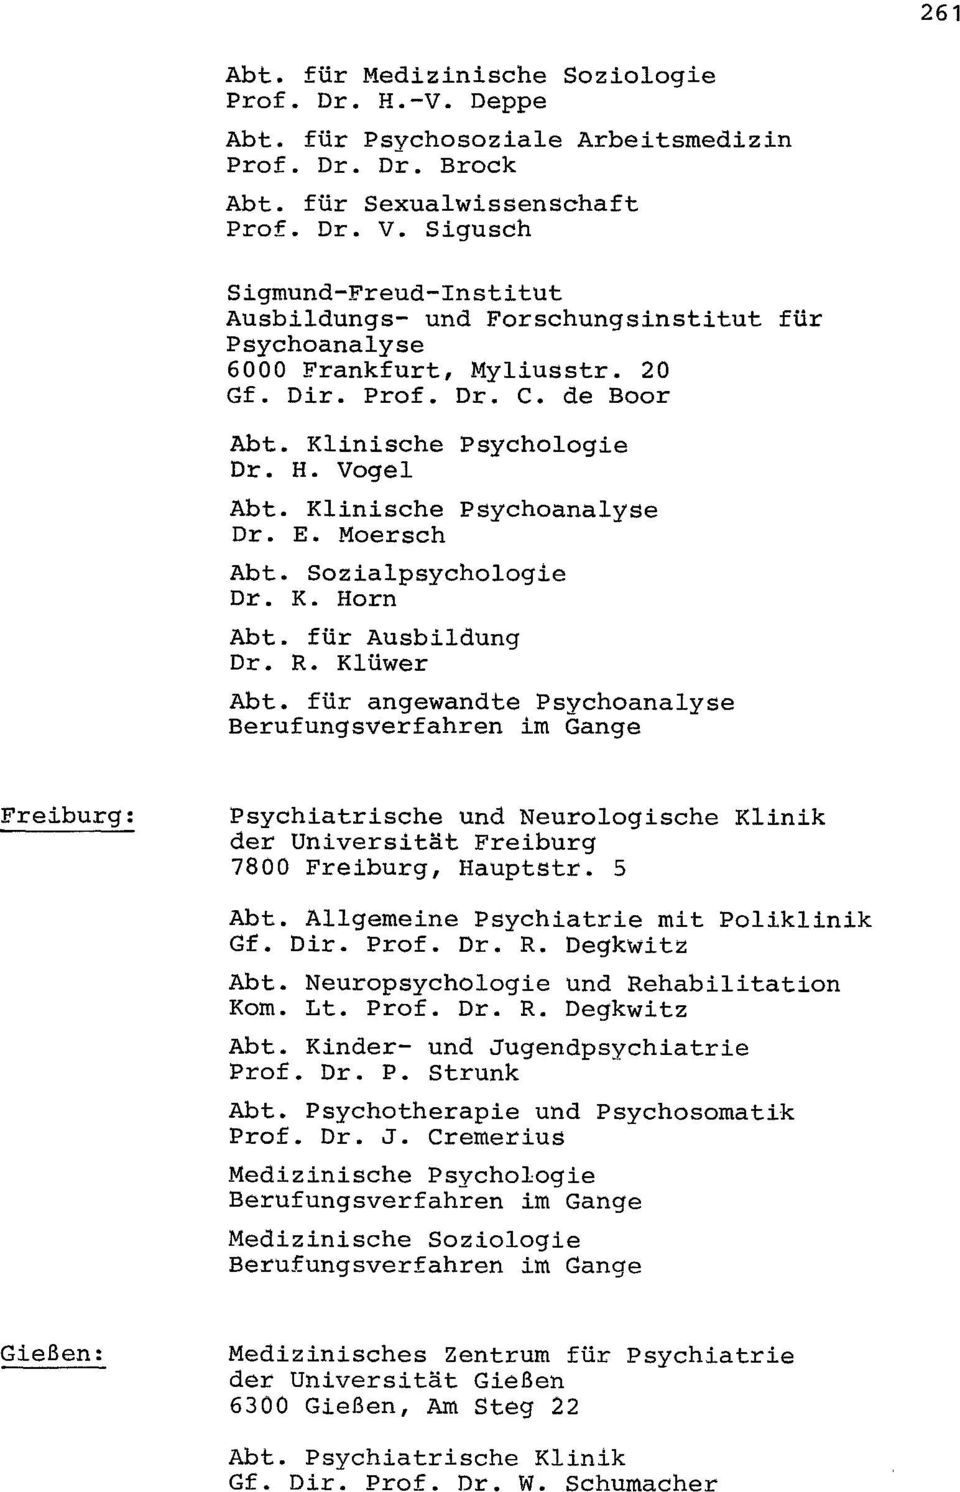 Klinische psychoanalyse Dr. E. Moersch Abt. Sozialpsychologie Dr. K. Horn Abt. für Ausbildung Dr. R. Klüwer Abt.